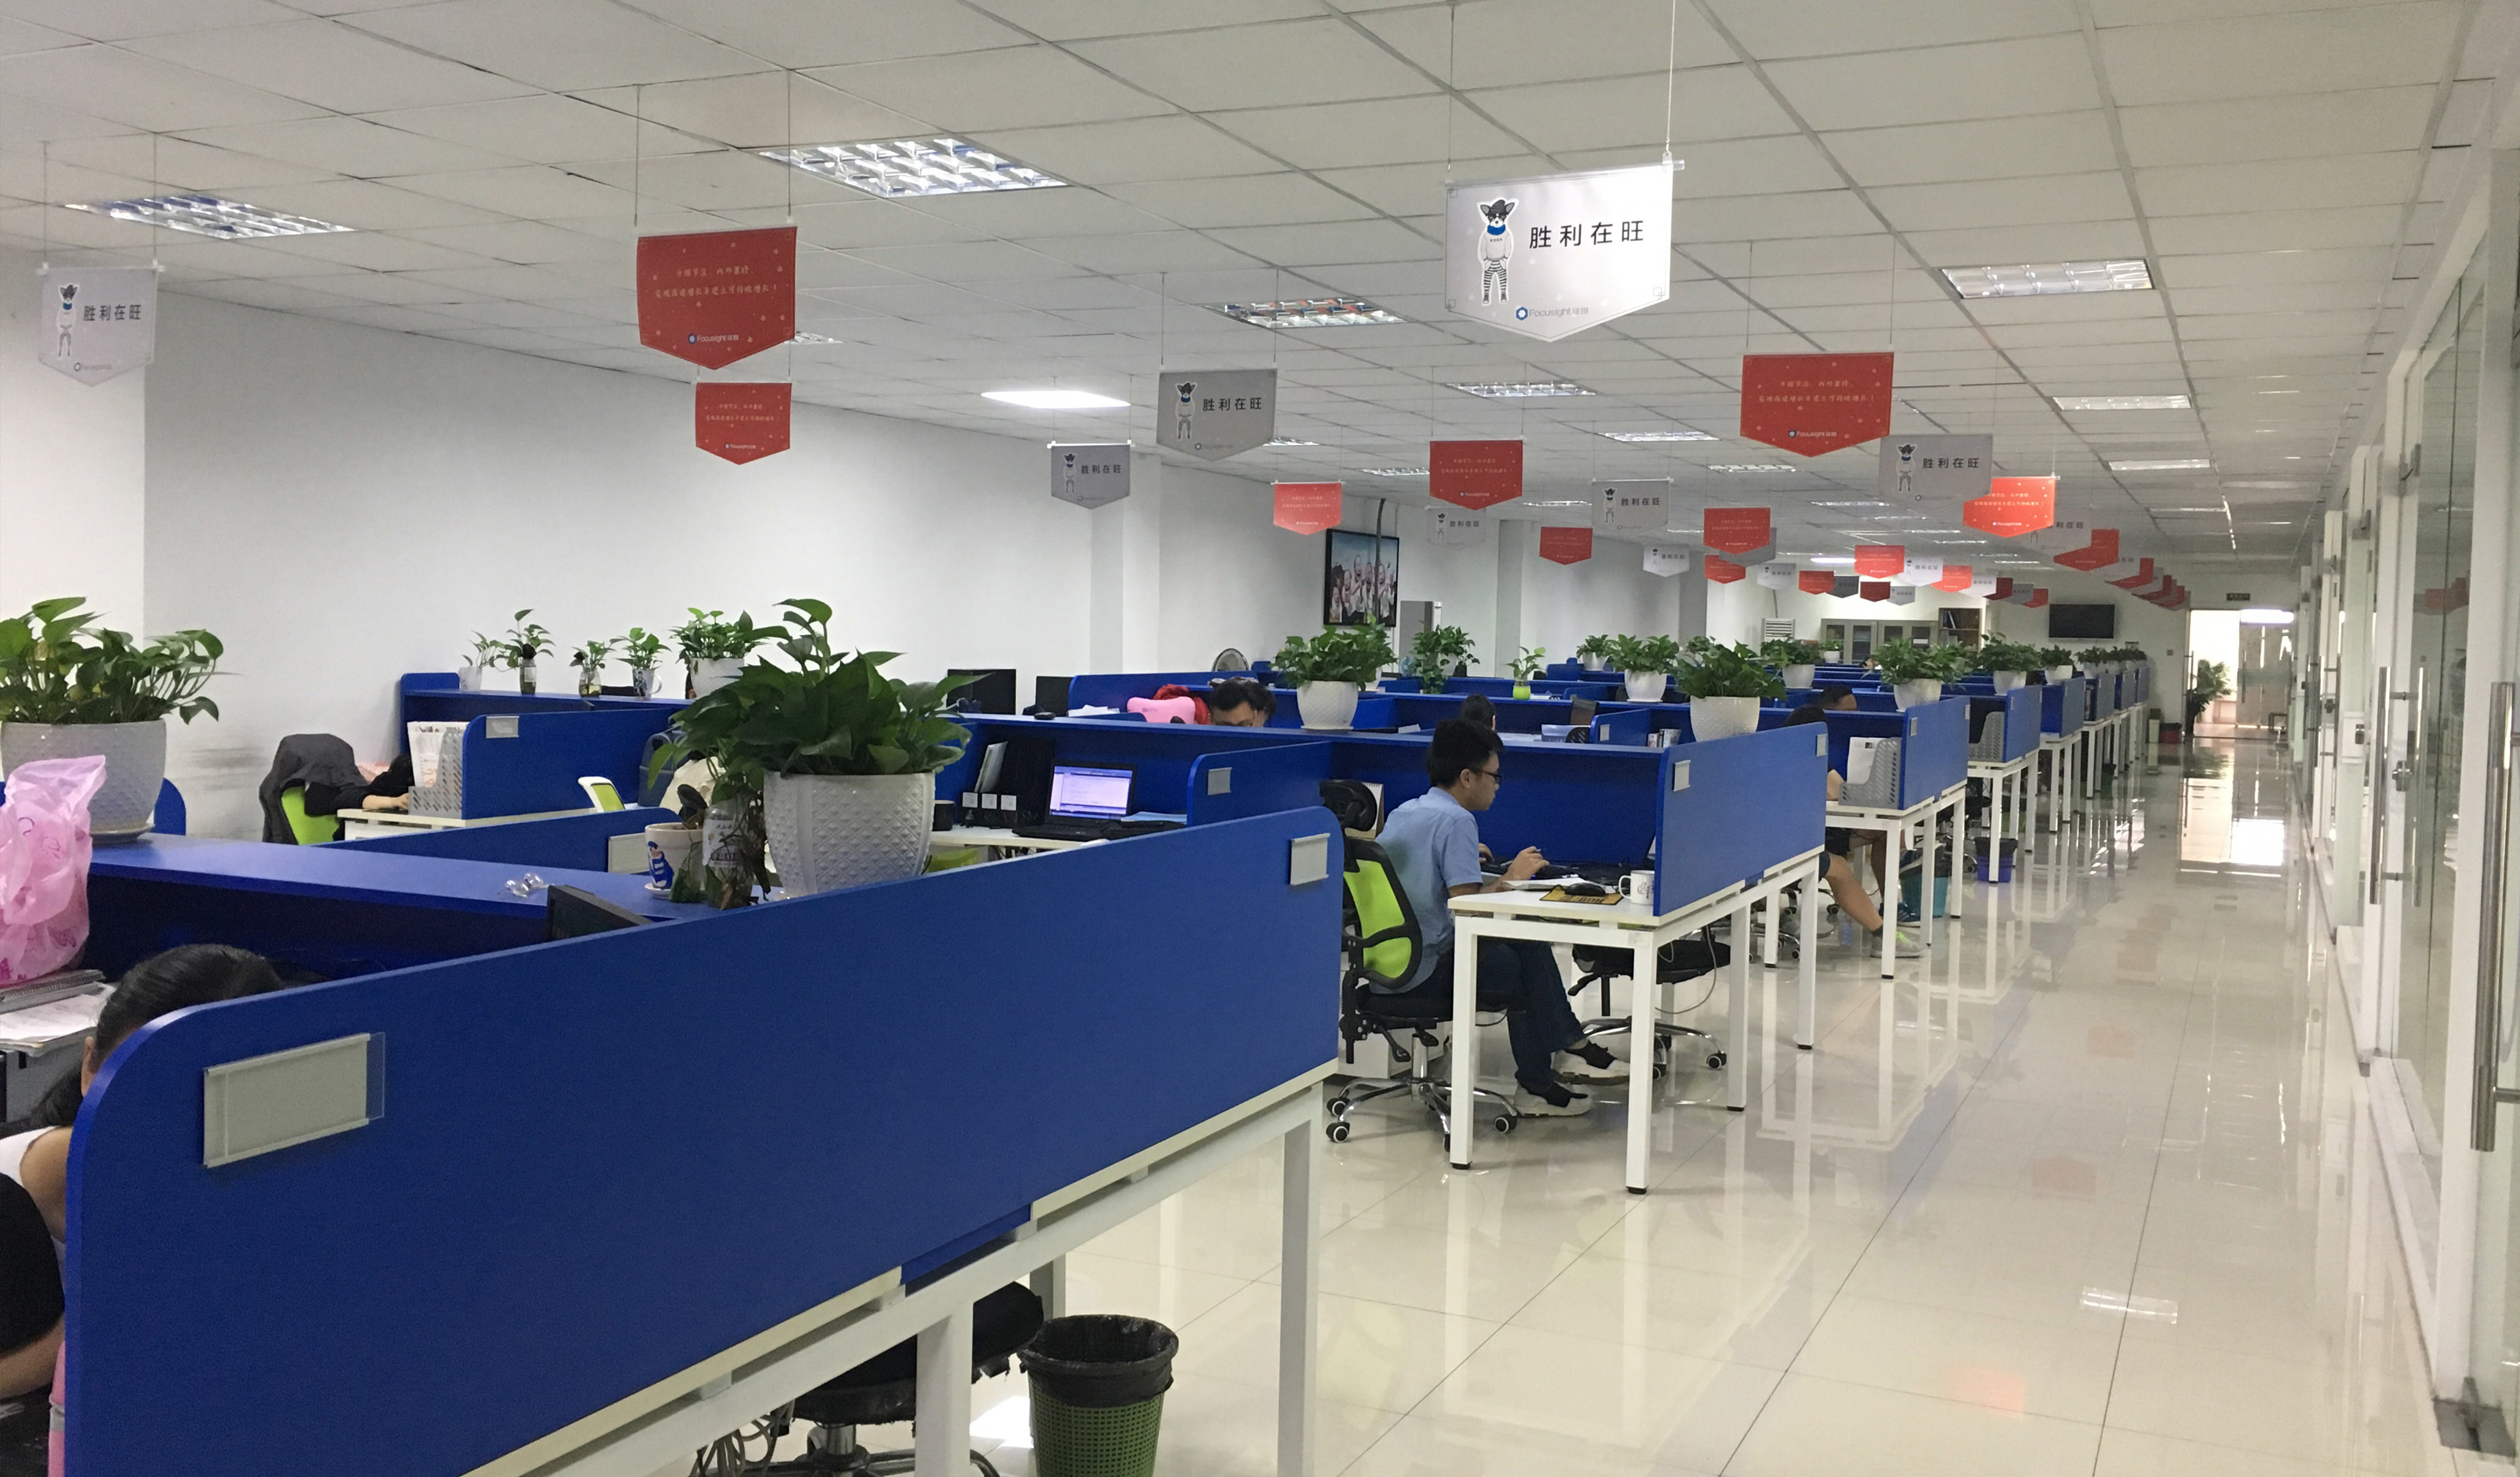 China Focusight Technology Co.,Ltd Unternehmensprofil